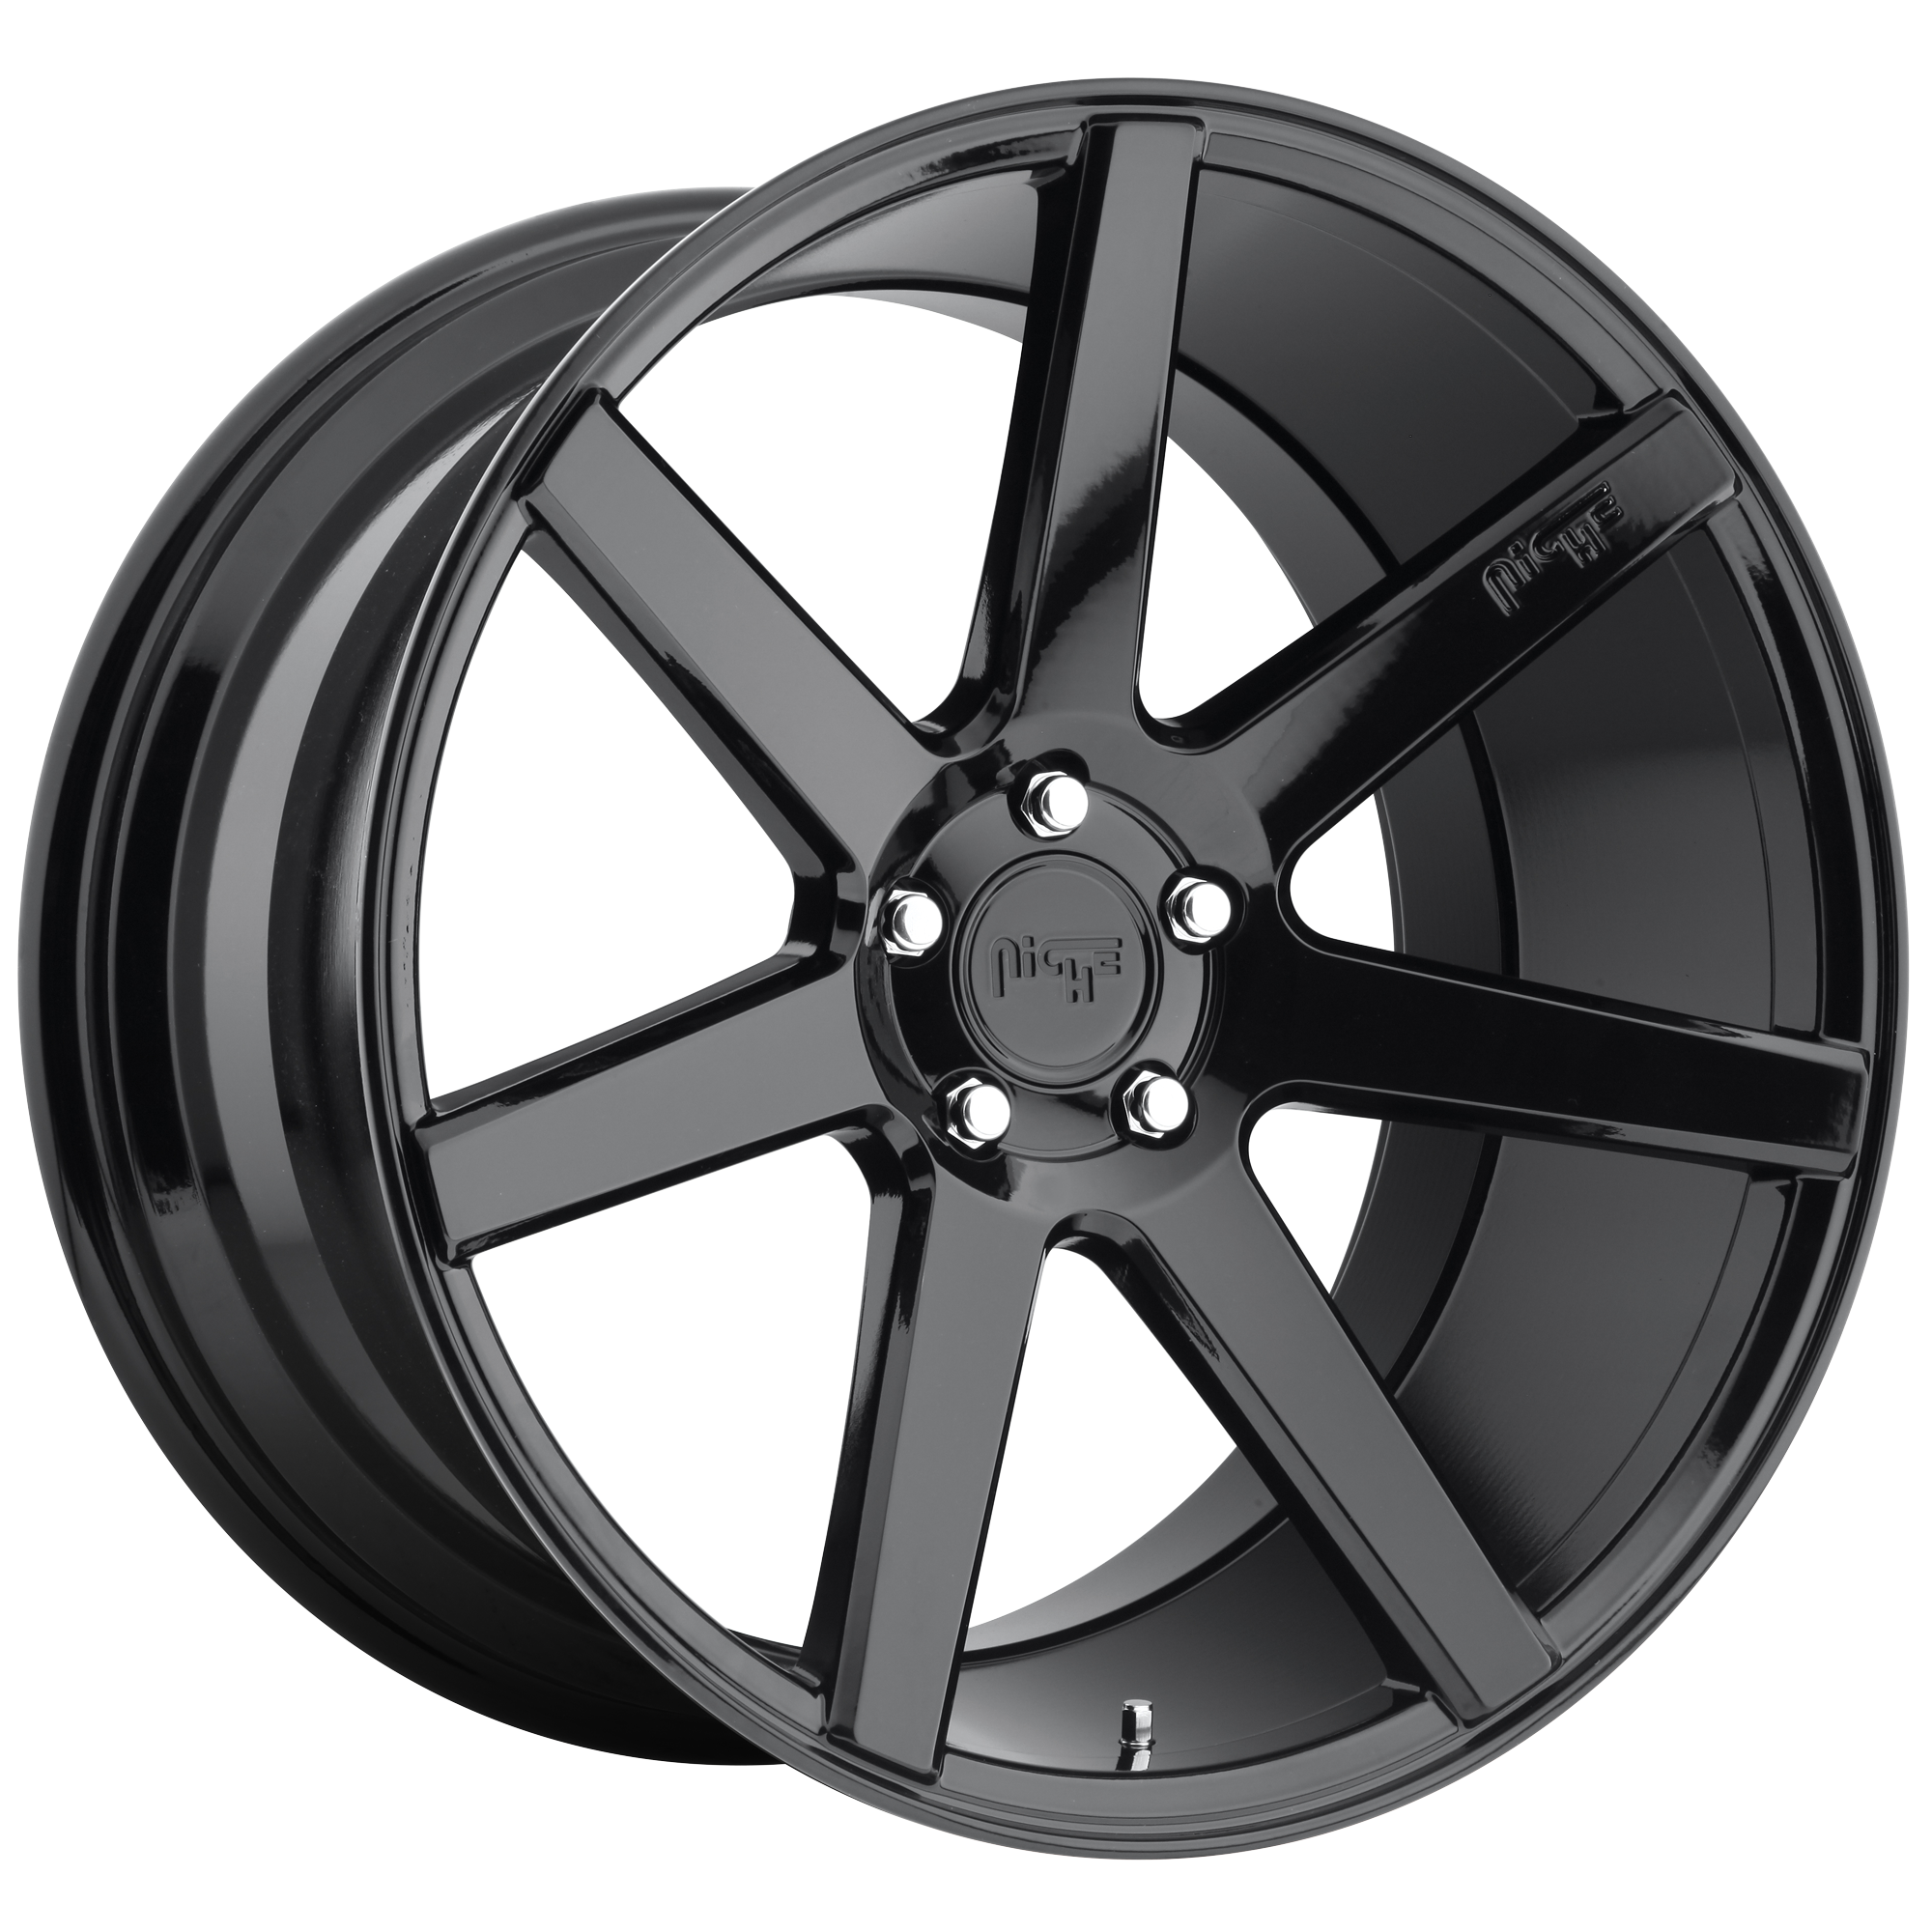 VERONA 22x10 5x120.00 GLOSS BLACK (40 mm) - Tires and Engine Performance